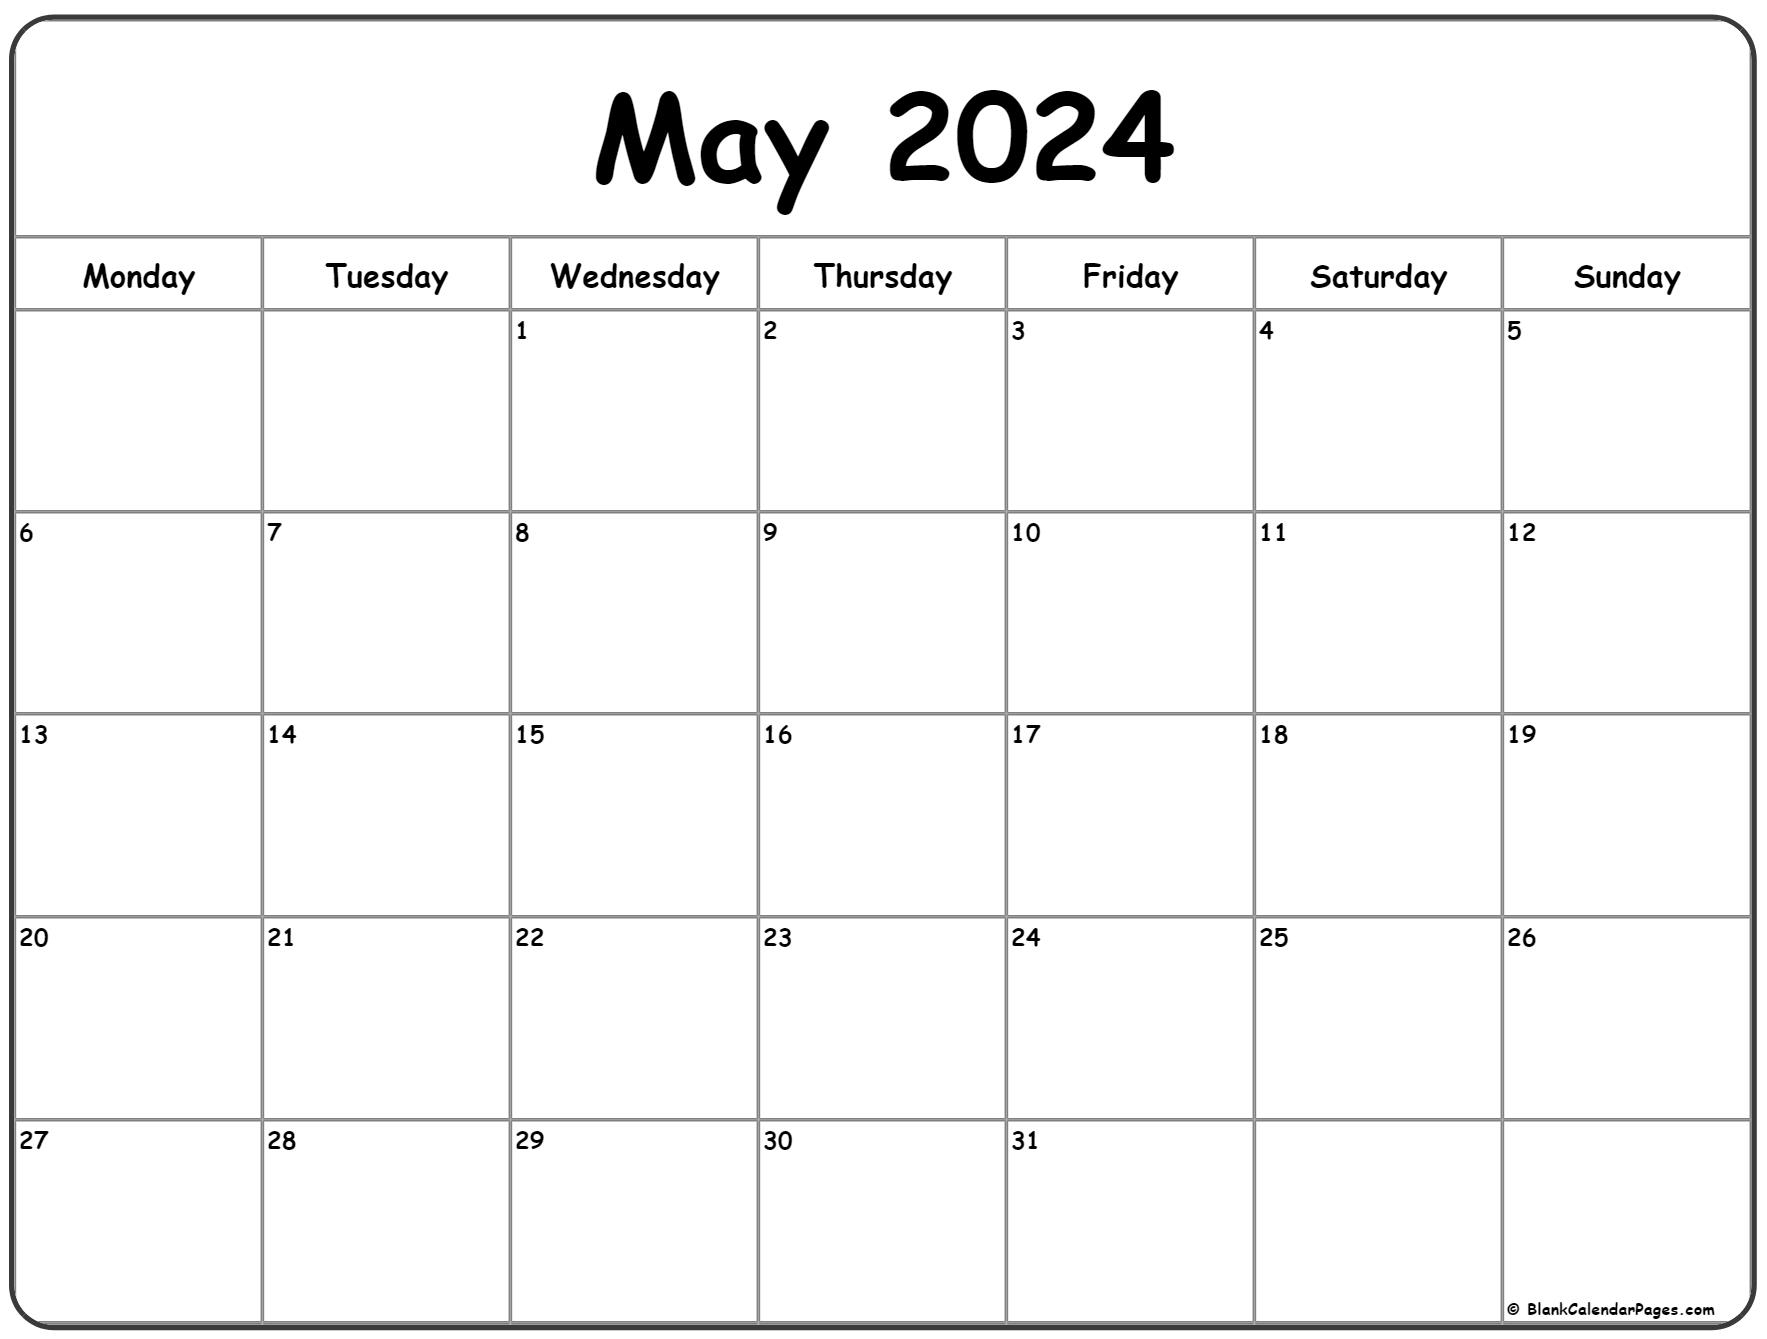 May 2024 Monday Calendar | Monday To Sunday for Printable Calendar Page May 2024